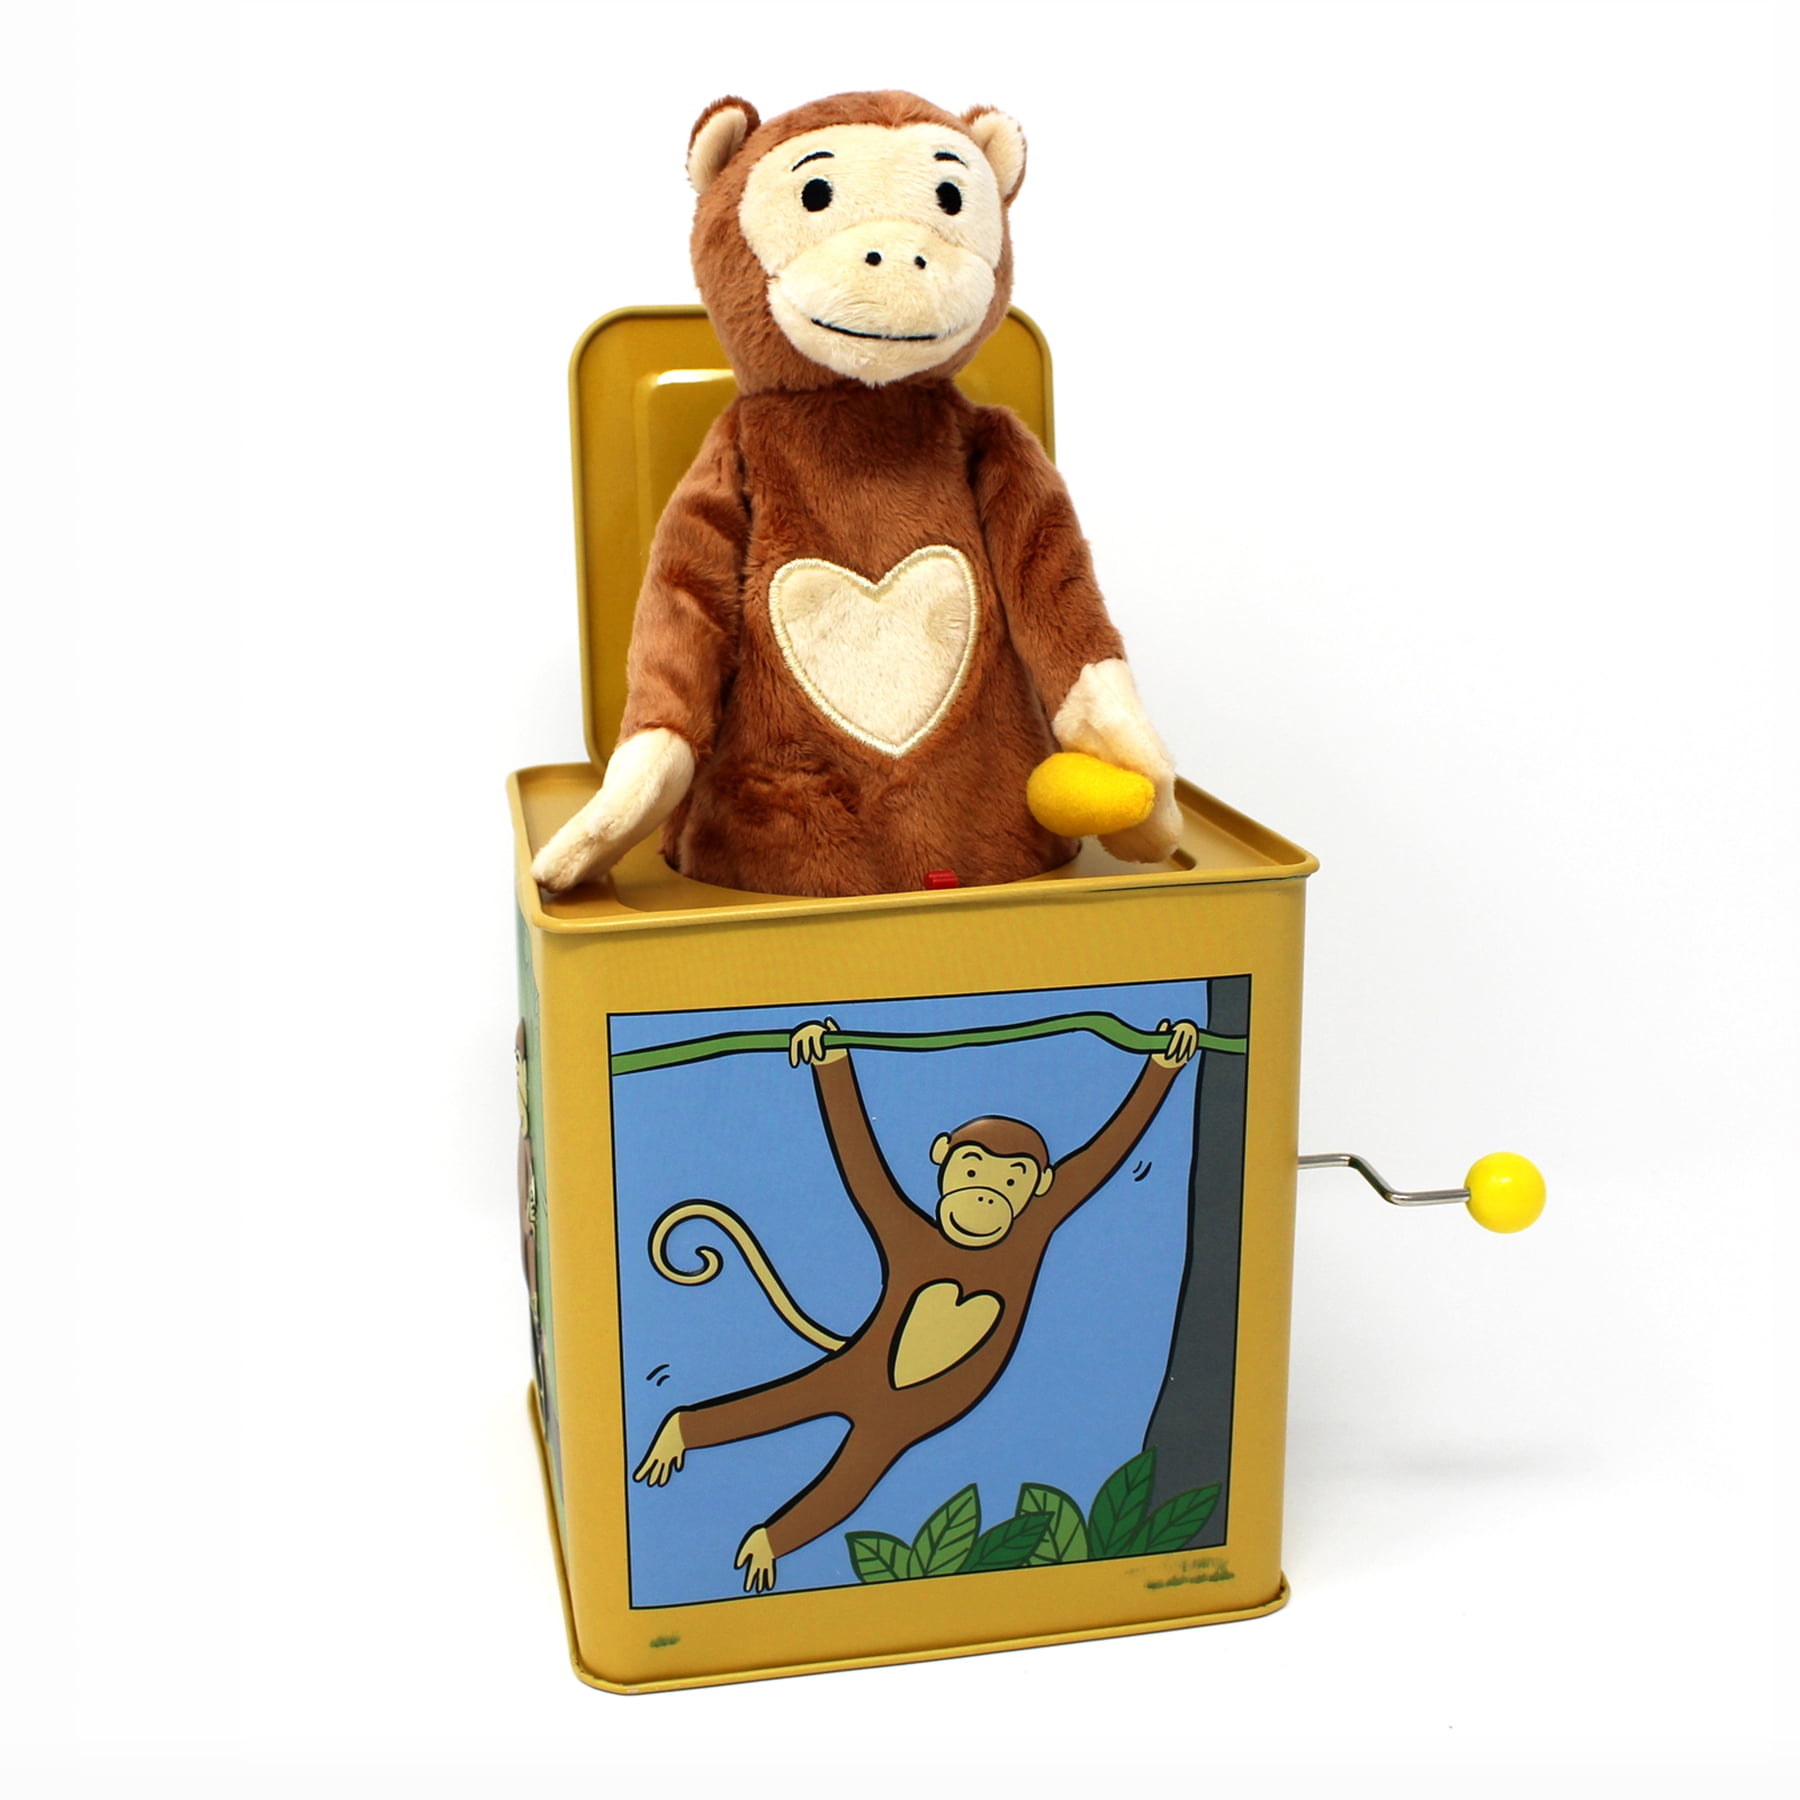 Jack Rabbit Creations Monkey Jack in the Box Toy - Walmart.com